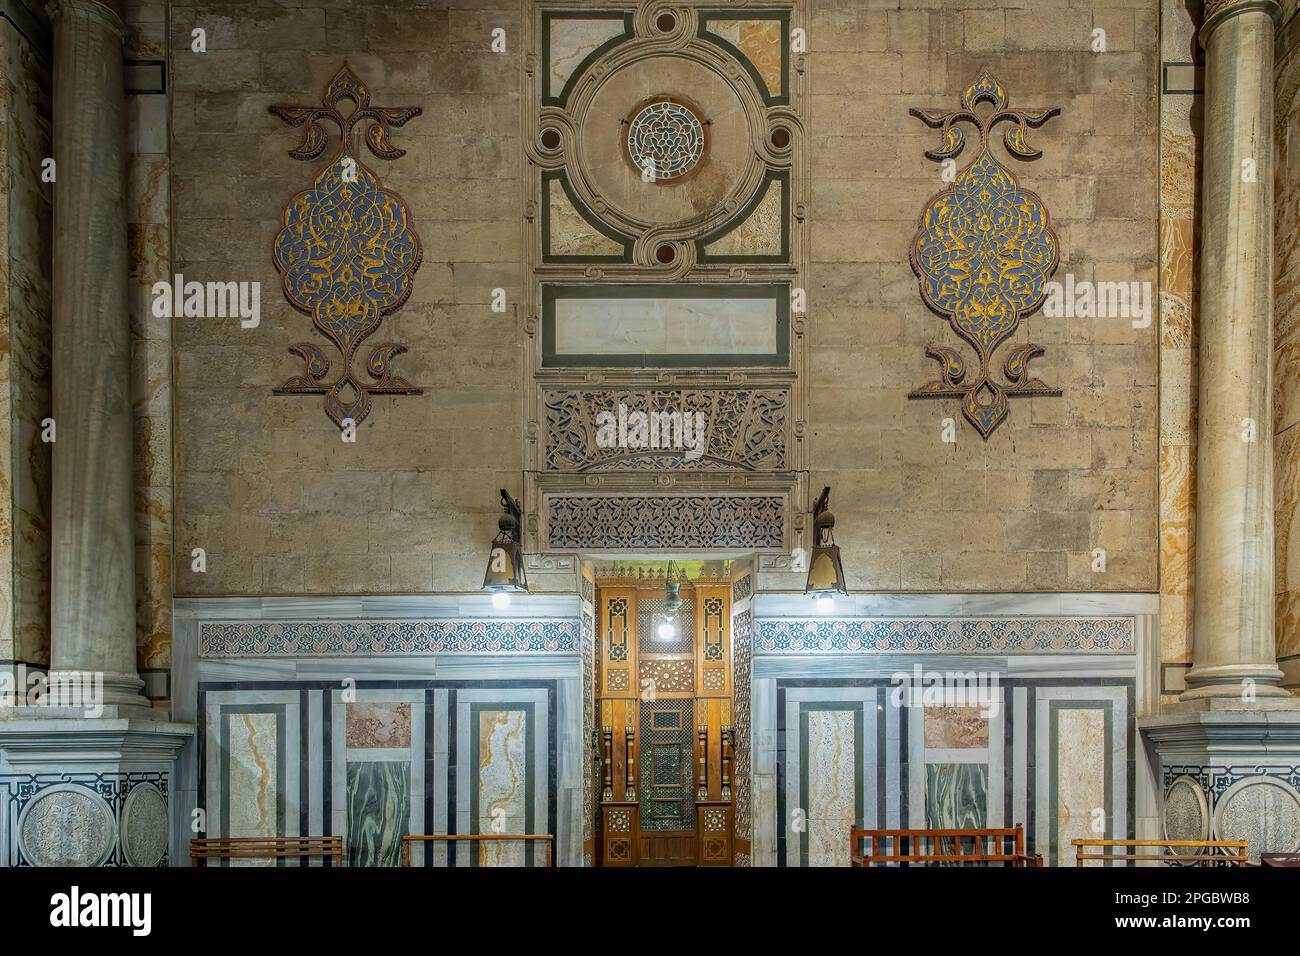 Inside of Mosque of Al-Rifa'i, Cairo, Egypt Stock Photo